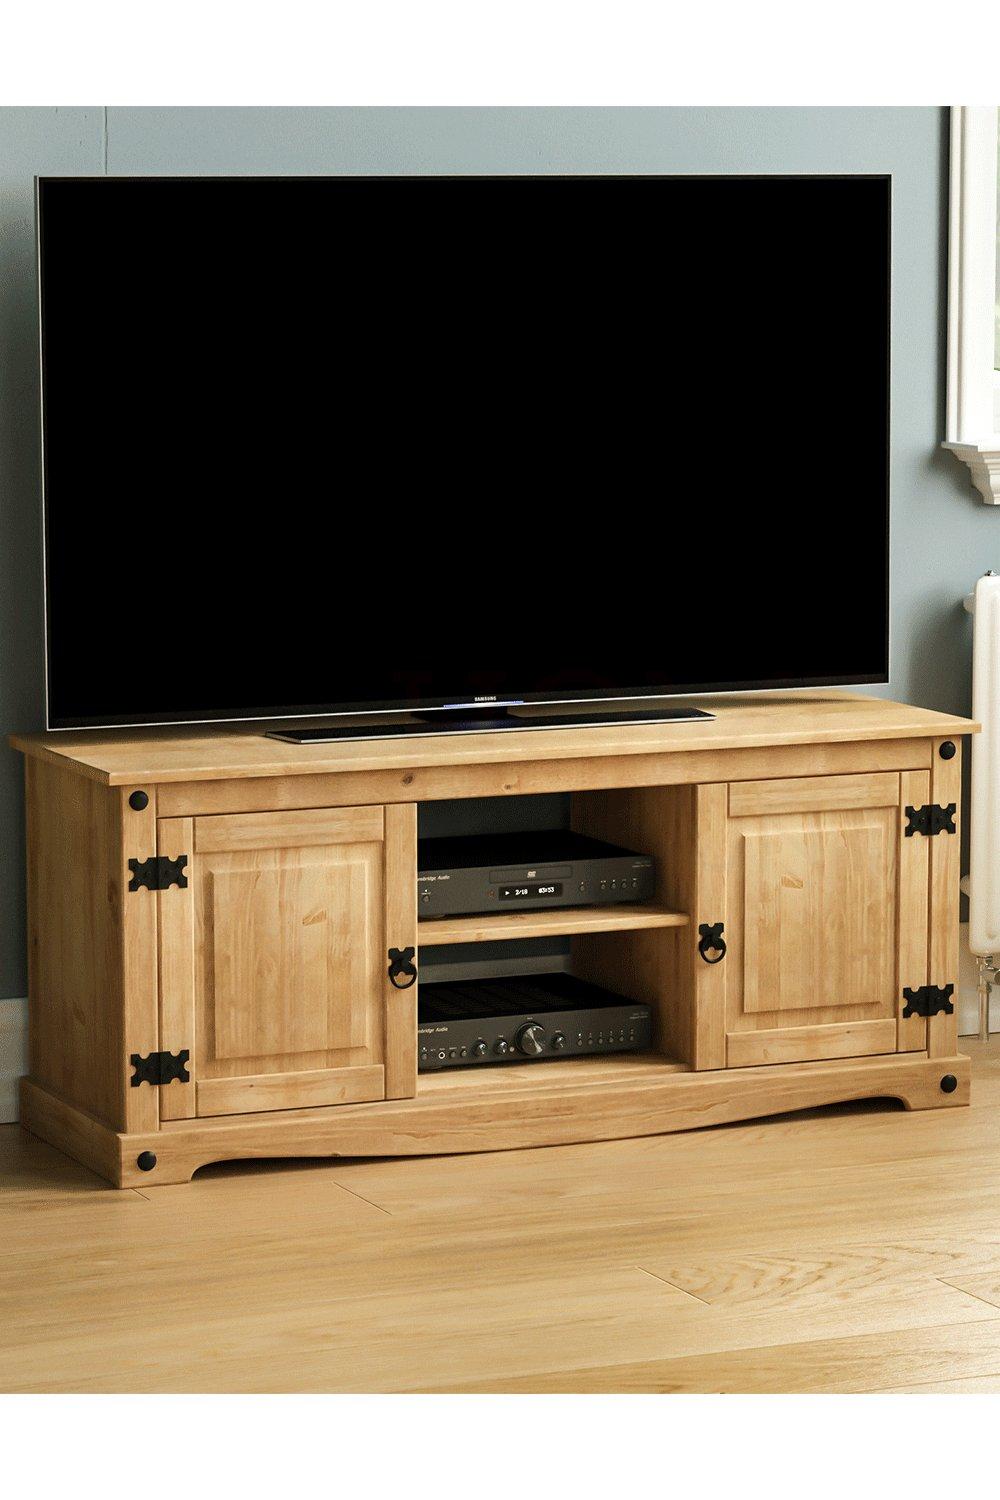 Vida Designs Corona 2 Door 1 Shelf Flat Screen TV Unit up to 50 Inches